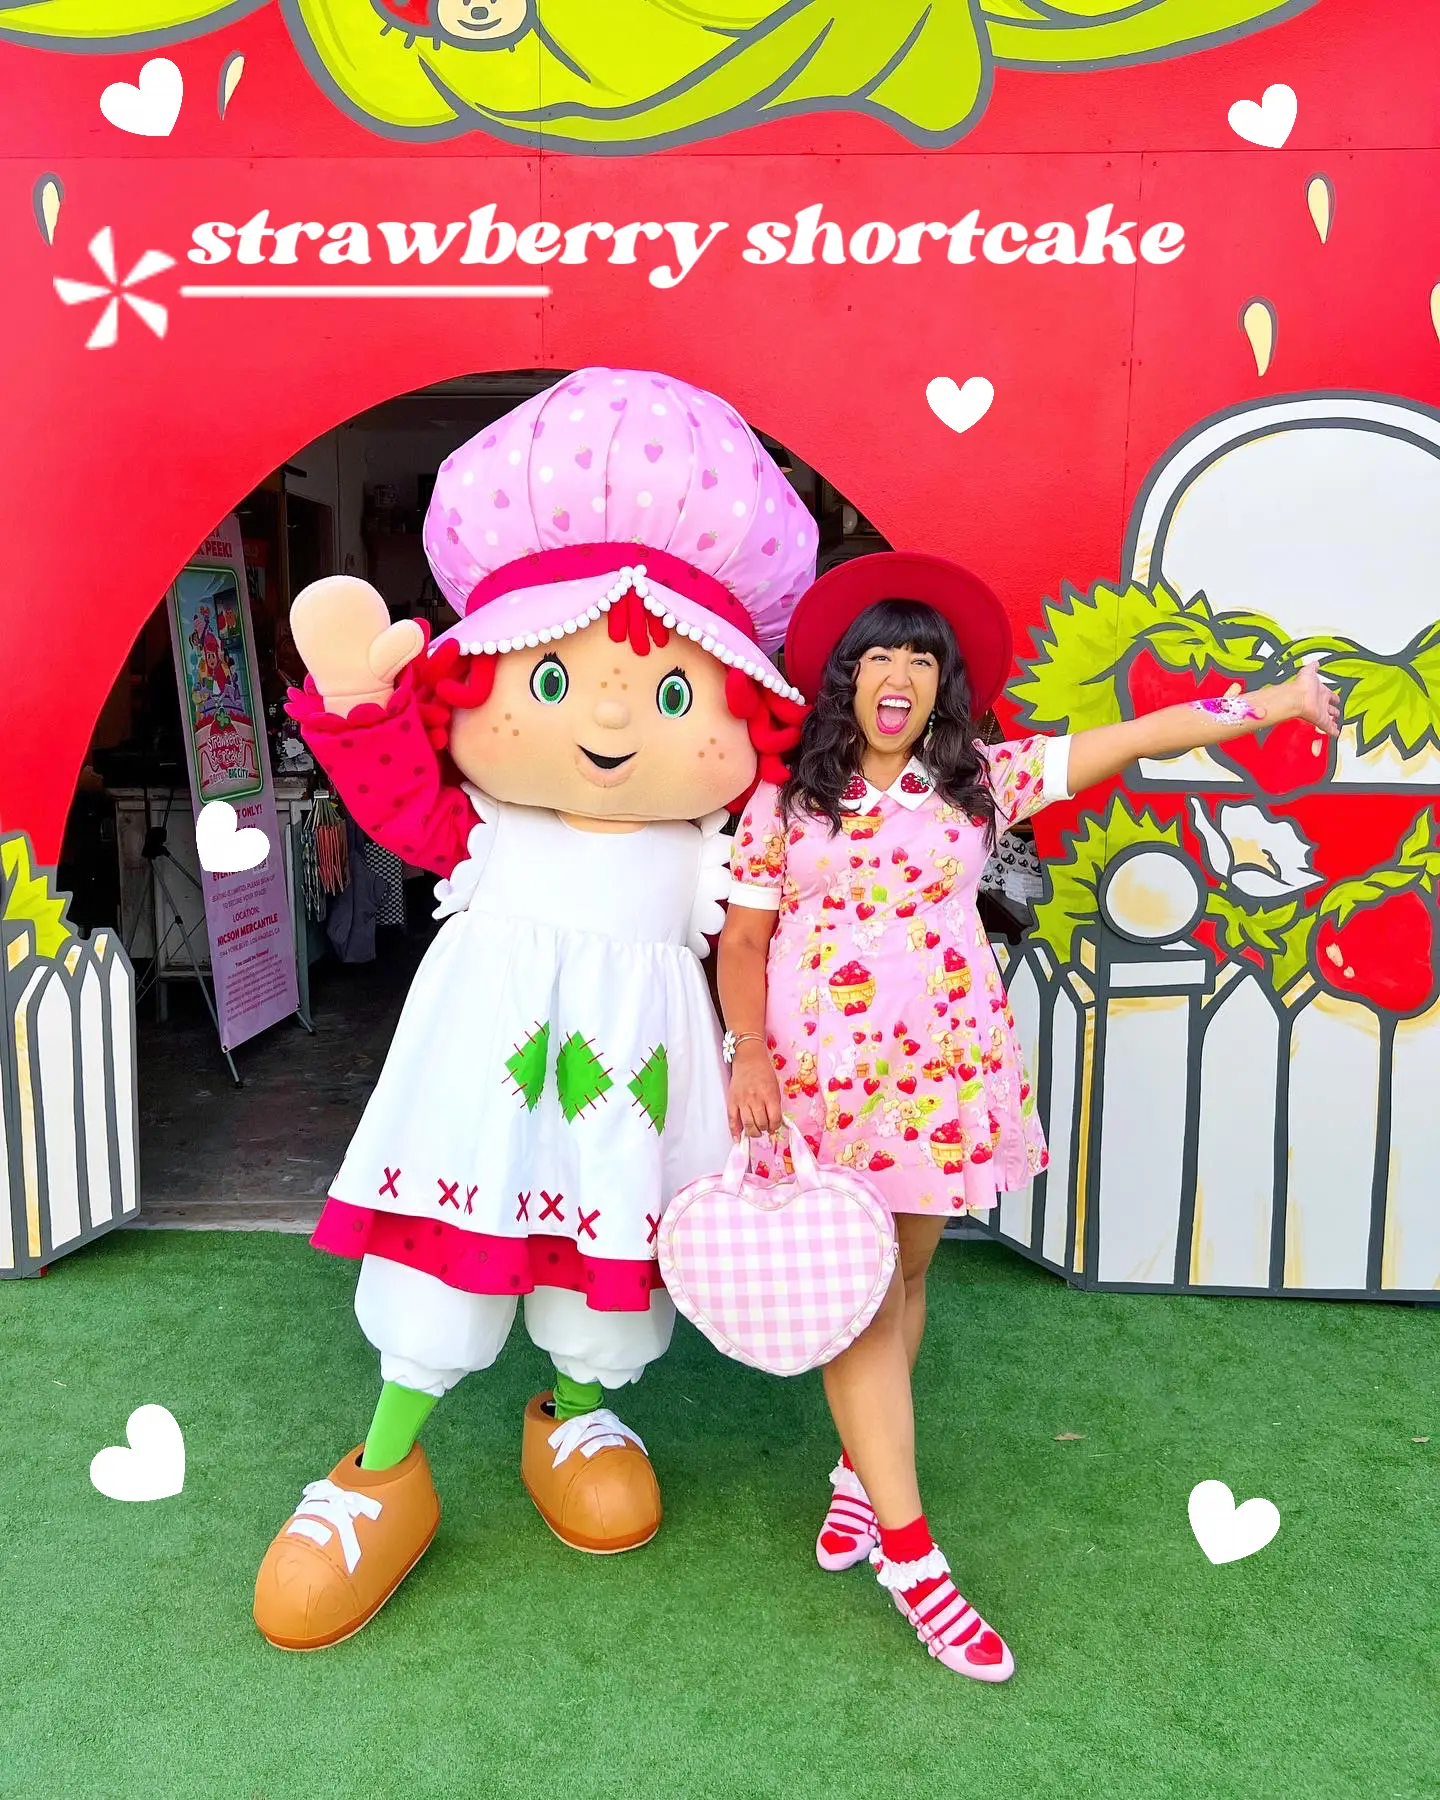 Xxx strawberry shortcake